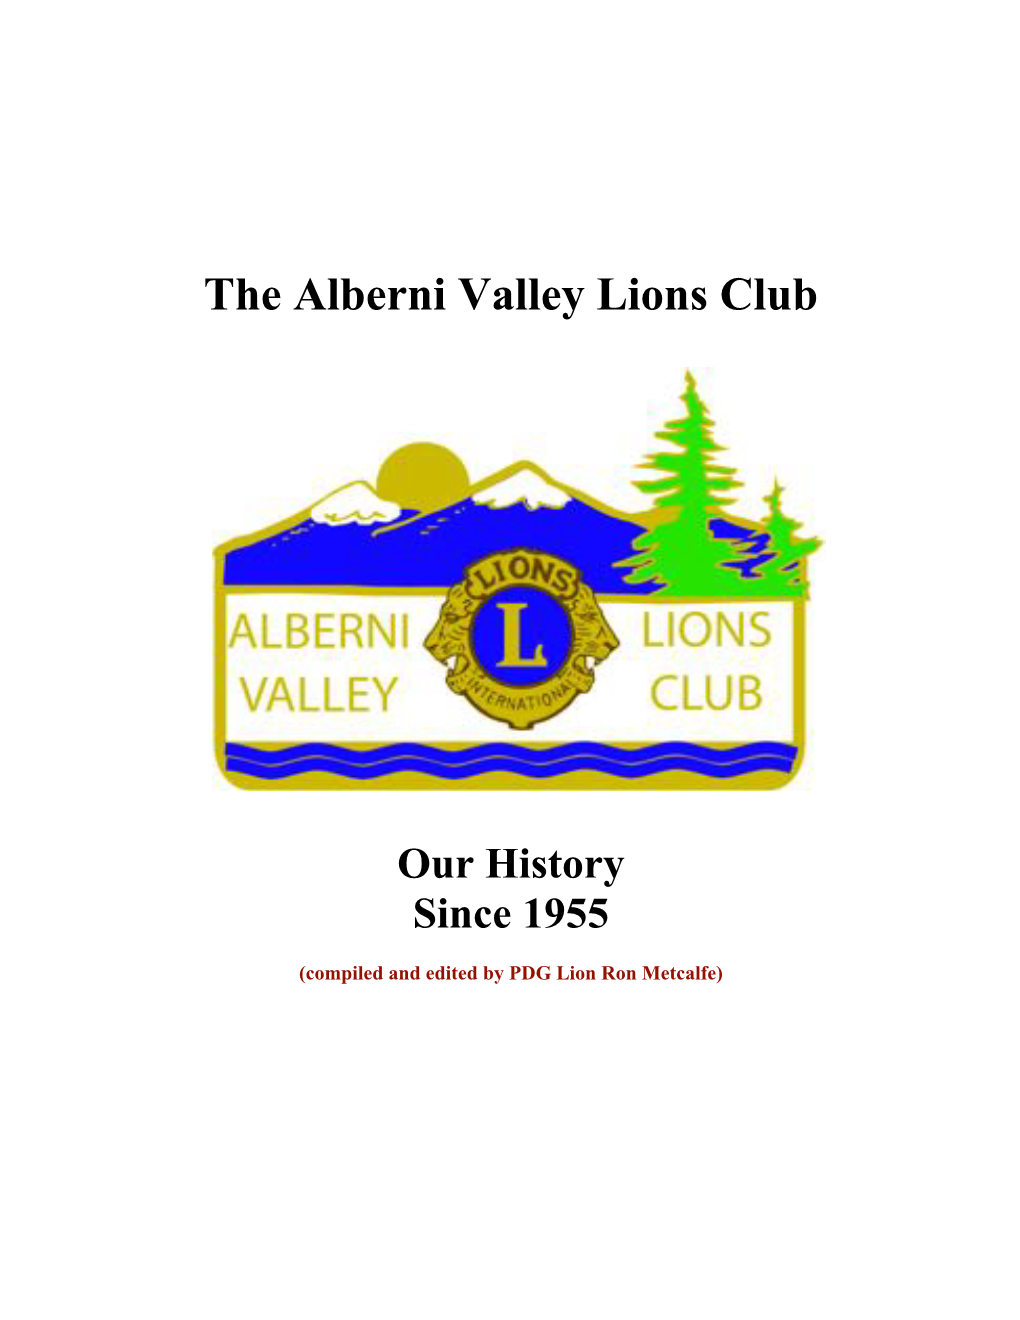 The Alberni Valley Lions Club: How It Began